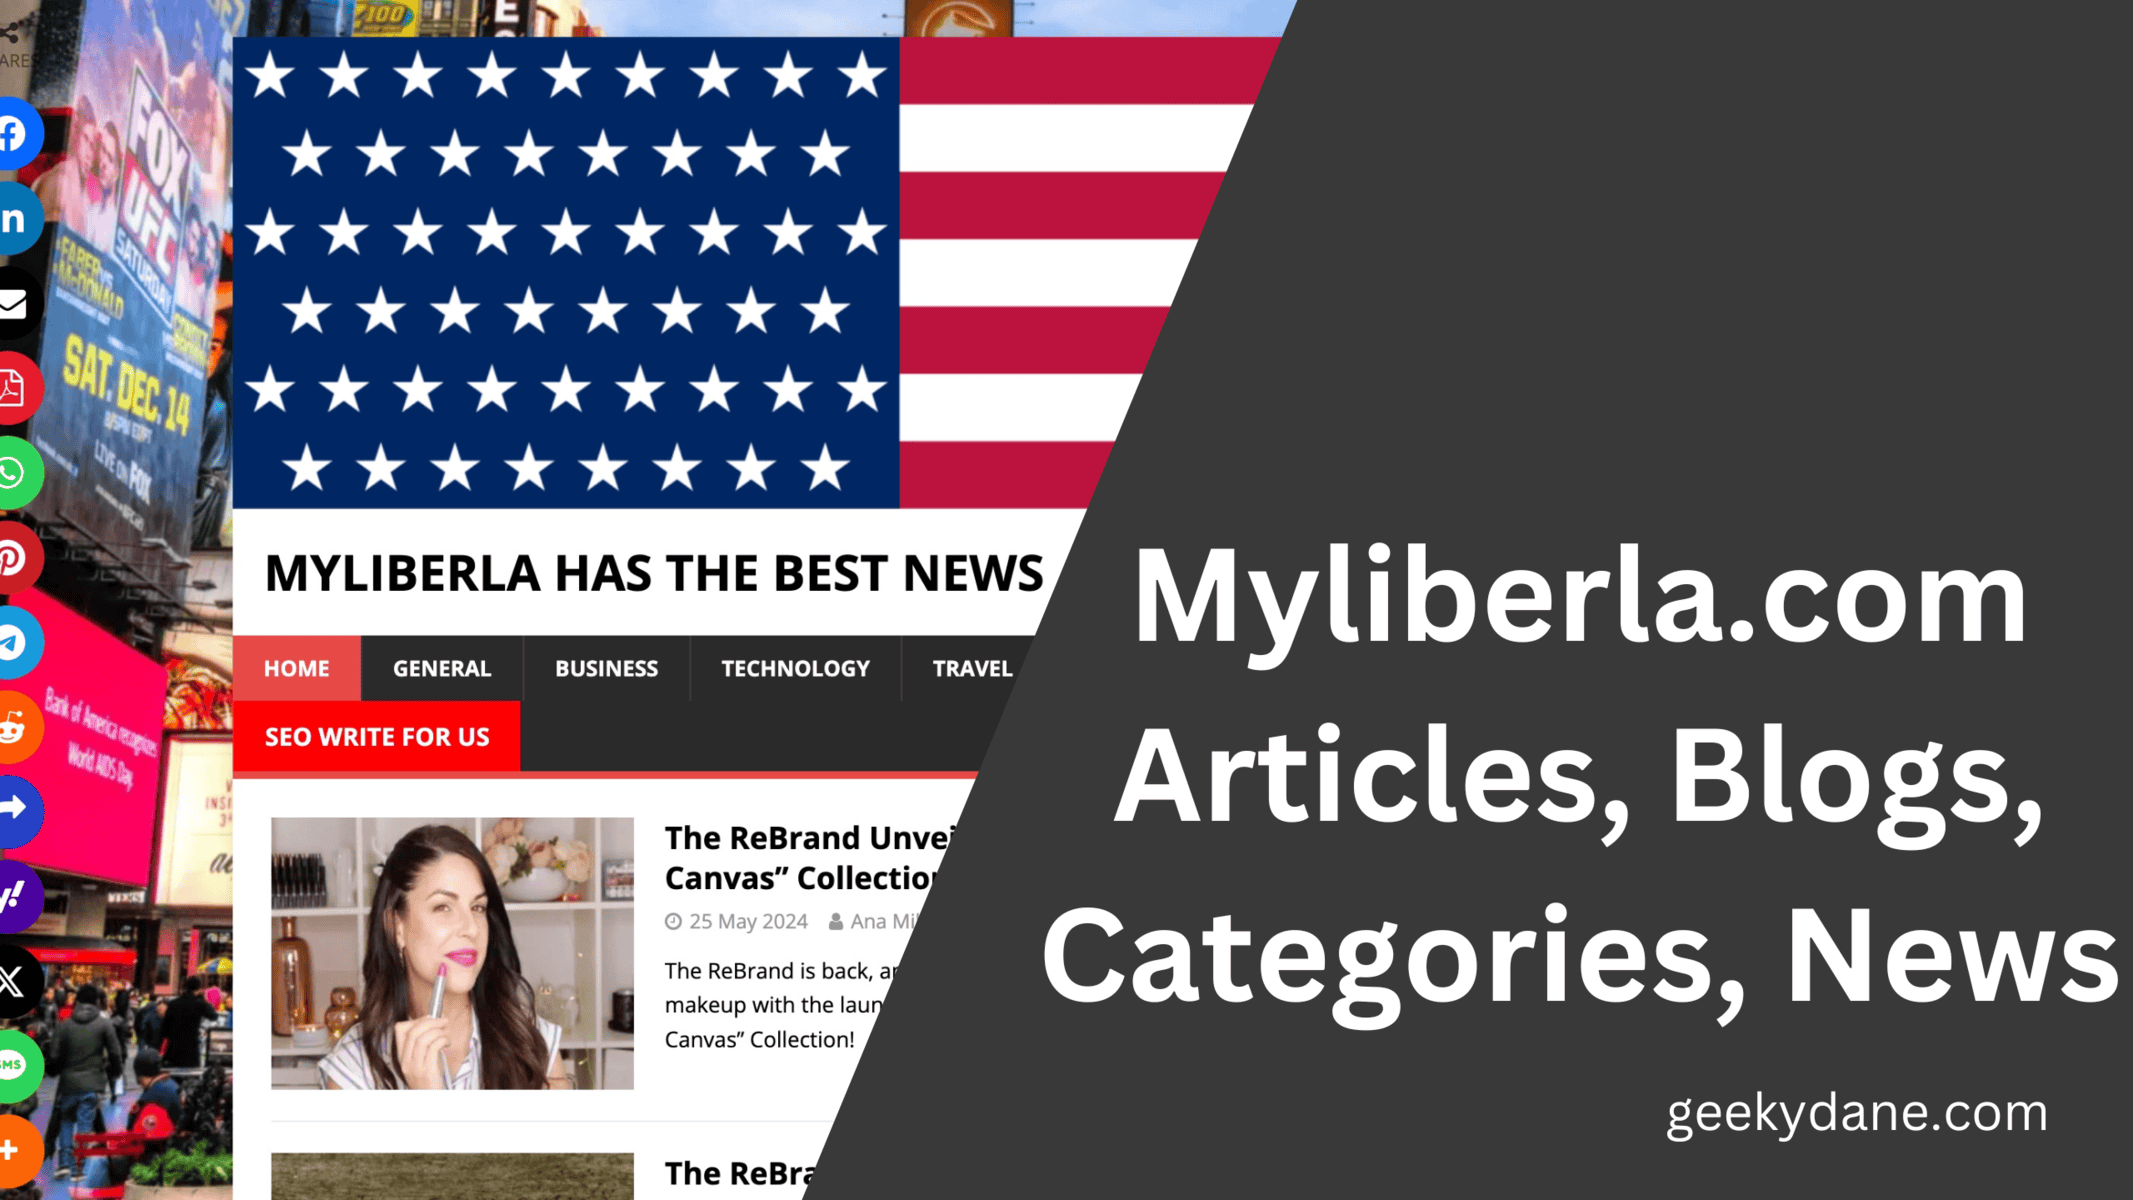 Myliberla.com Articles, Blogs, Categories, News